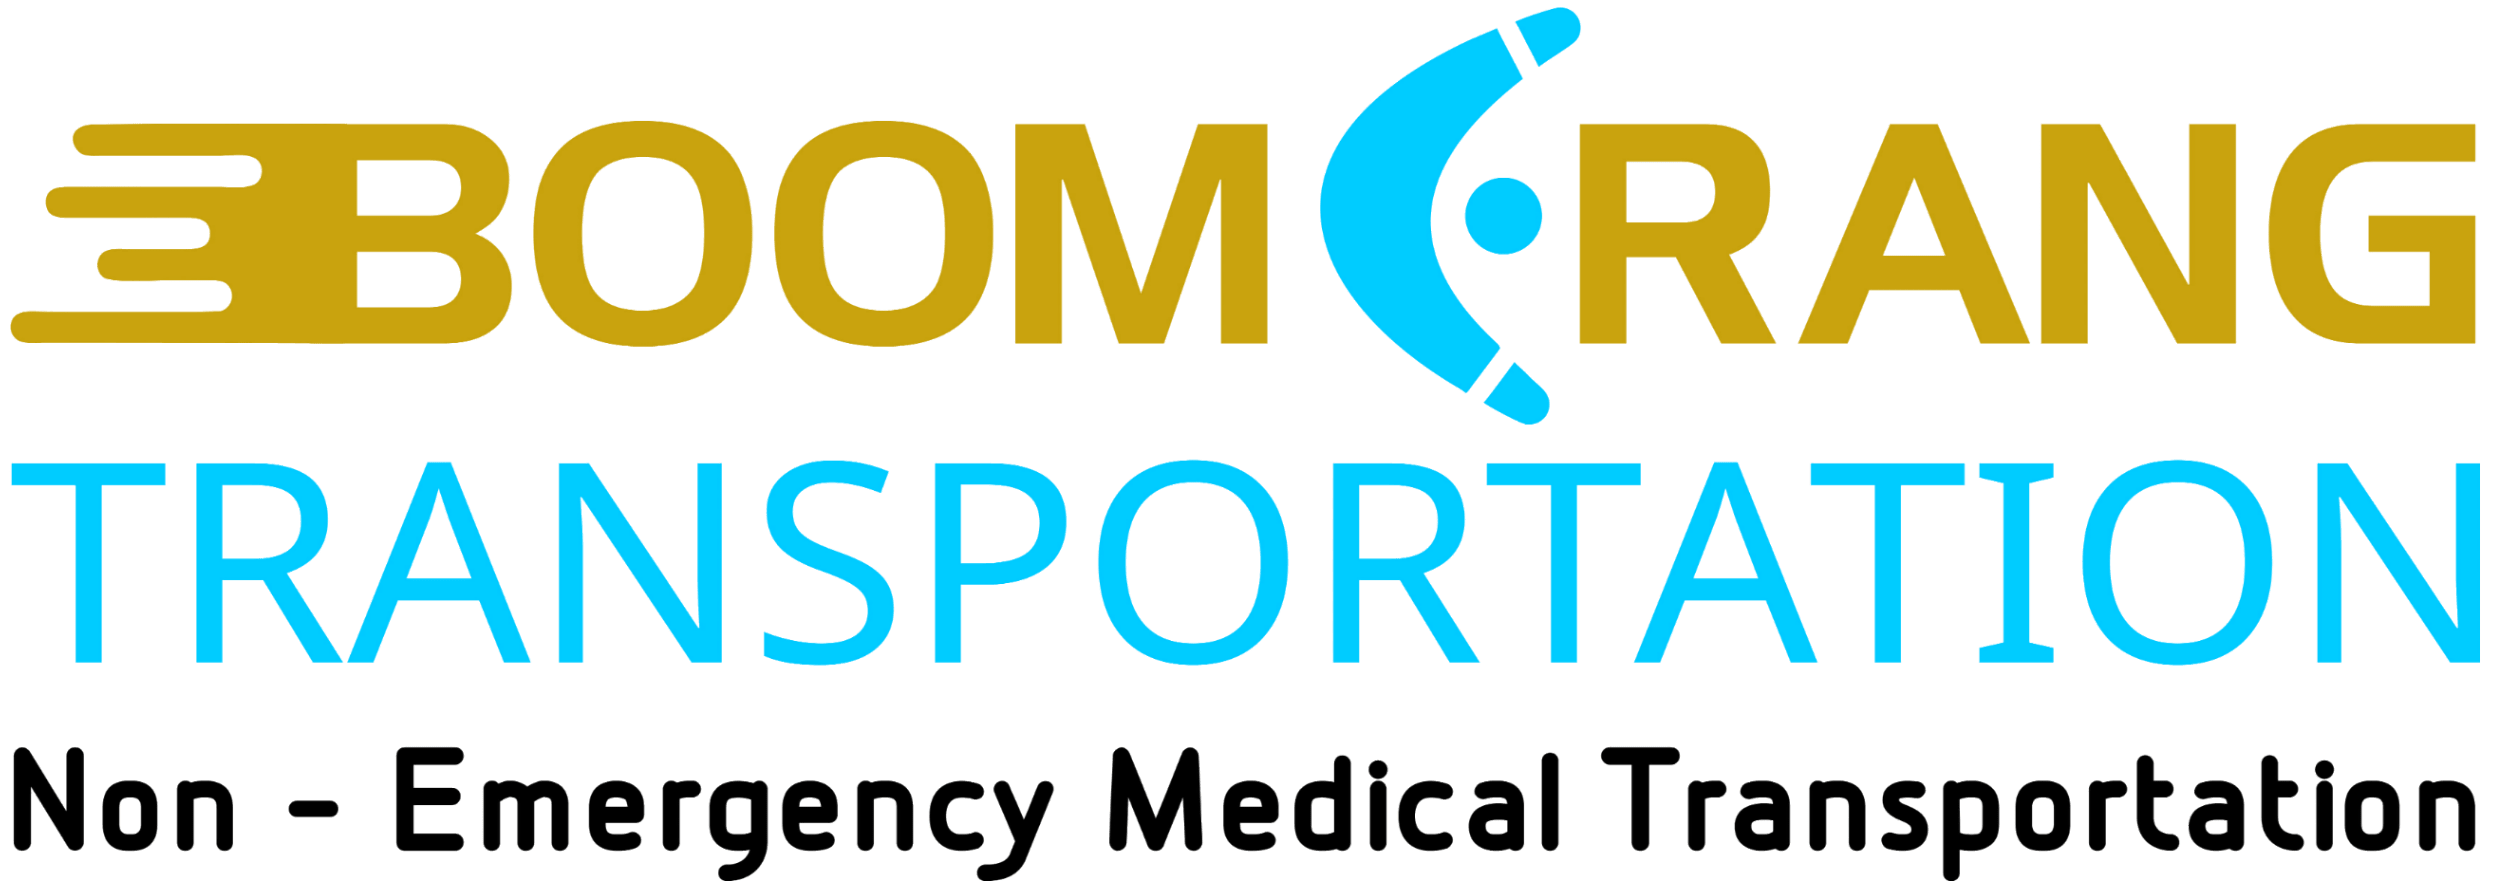 Wheelchair Transportation NJ | Non-Emergency Medical Transportation in New Jersey -Boomerang